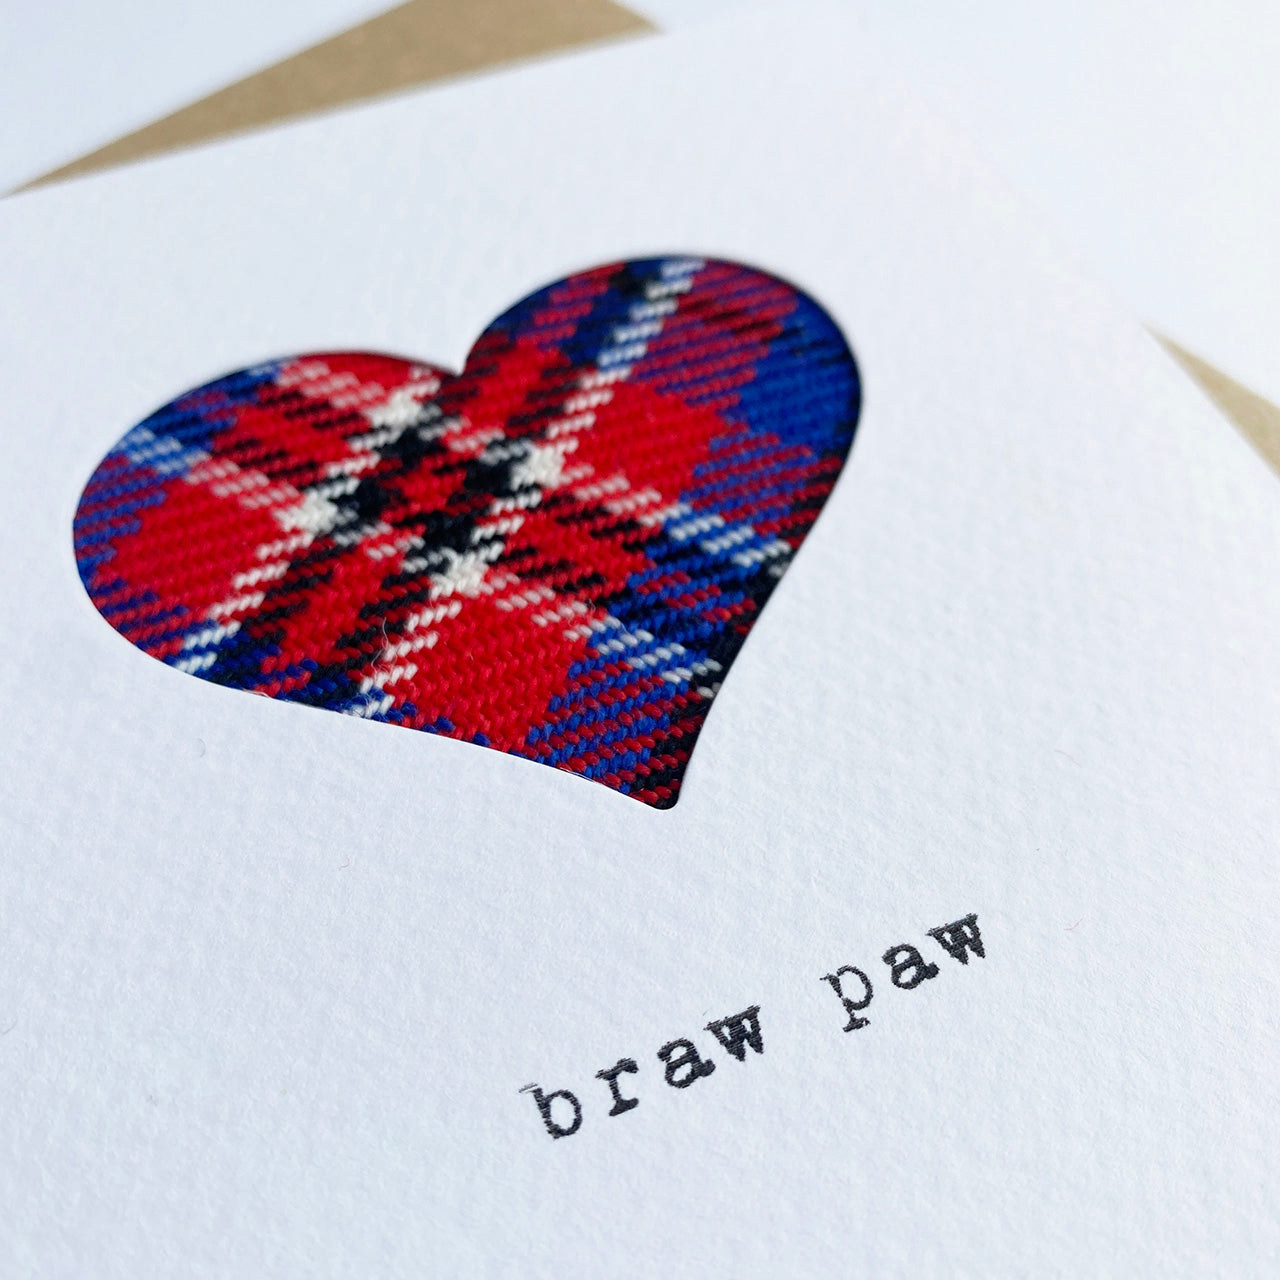 'Braw Paw' Scottish Father's Day Card - HiyaPal